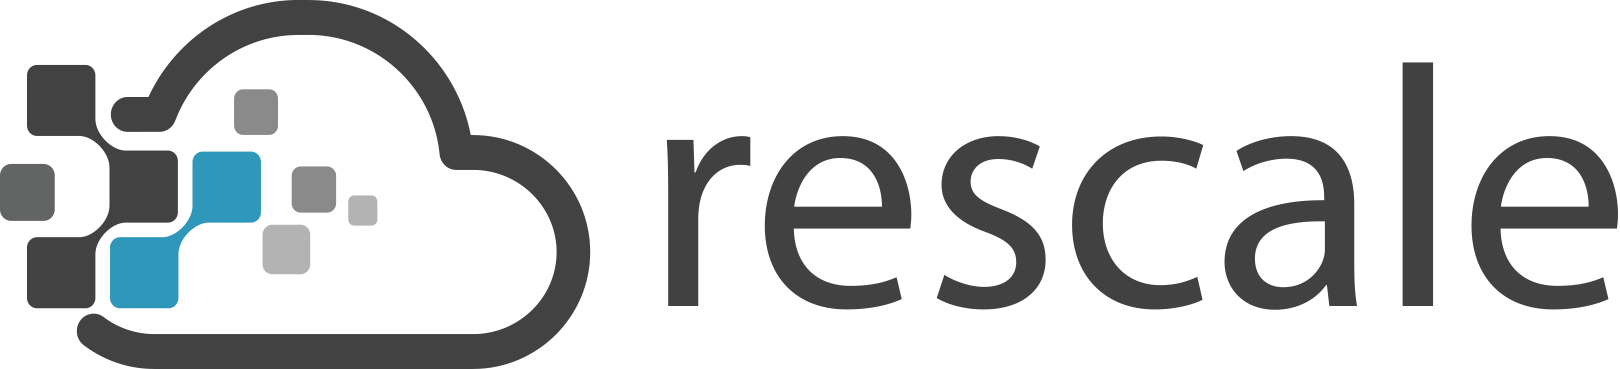 rescal Japan株式会社 logo 白バック